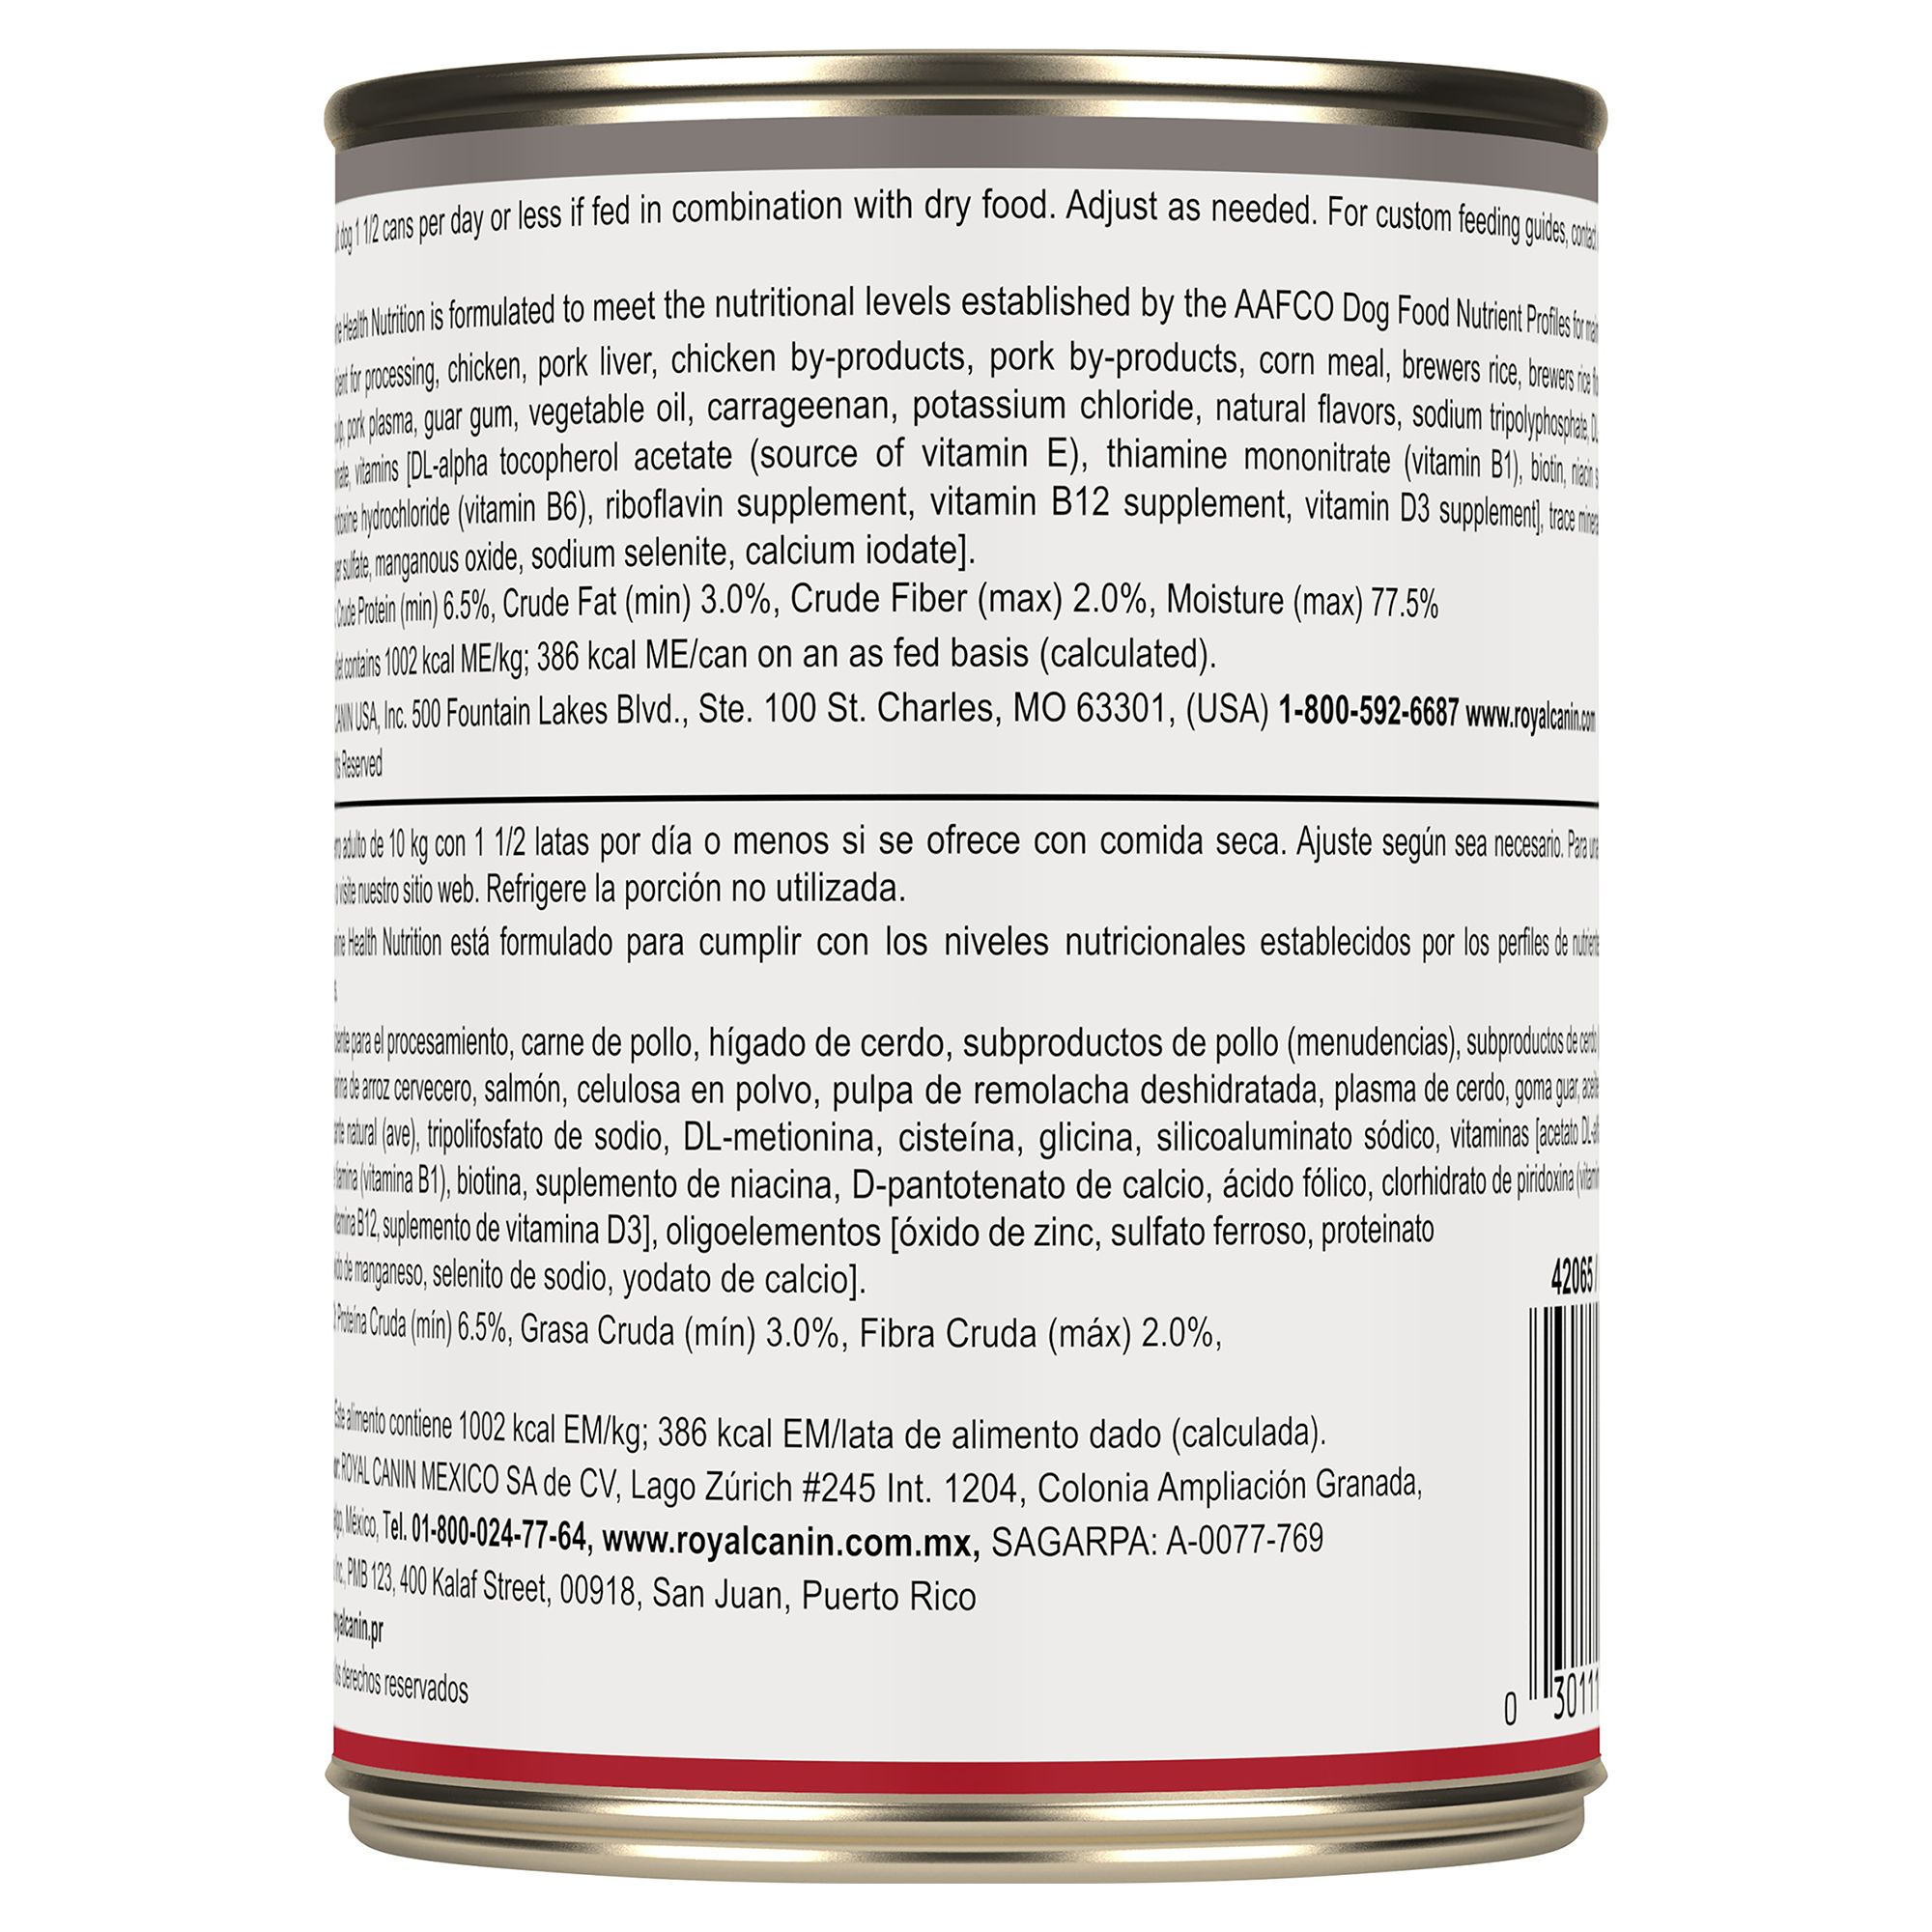 royal canin canned dog food petsmart